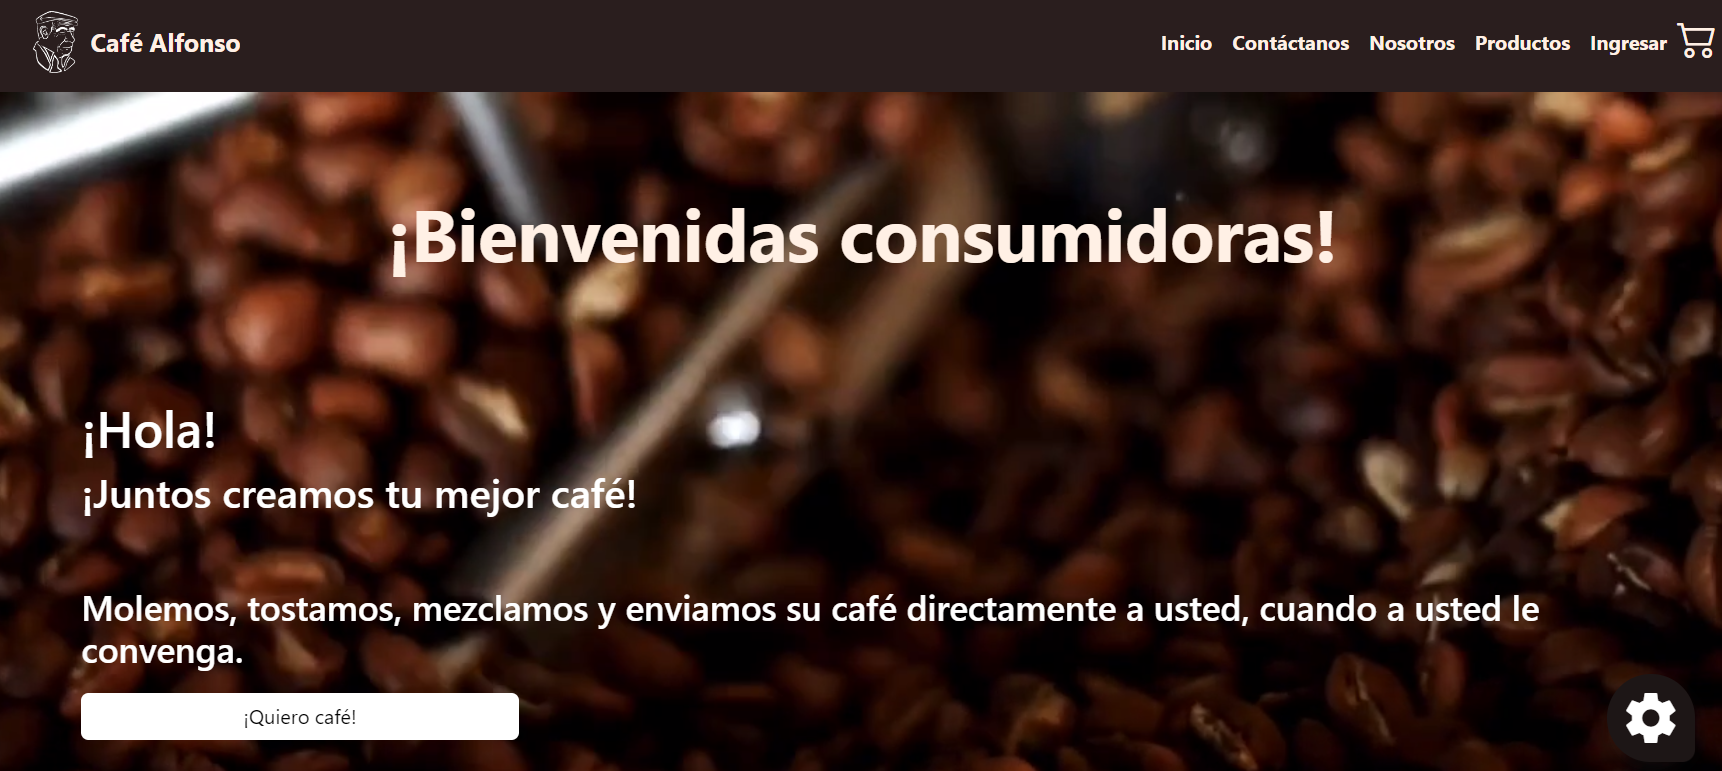 Café Alonso E-commerce